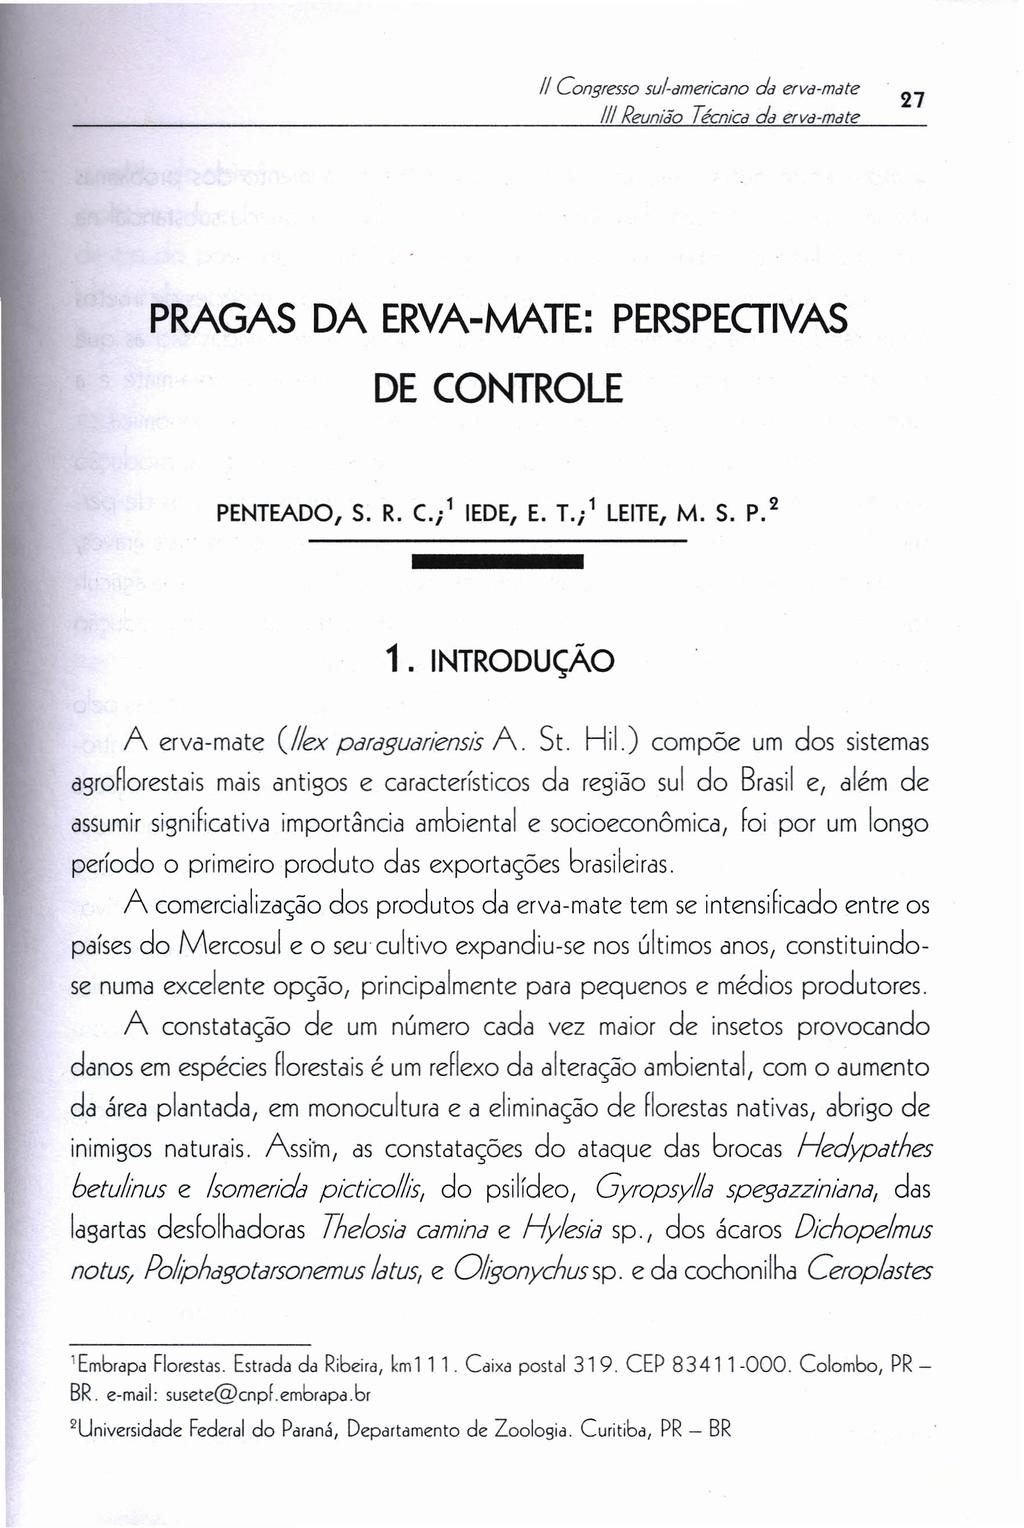 Ii Congresso sul-americano da erva-mate 27 PRAGAS DA ERVA-MATE: DE CONTROLE PERSPEGIVAS 1 1 2 PENTEADO, S. R. c., IEDE, E. T.; LEITE,M. S. P. 1. INTRODUÇÃO A erva-mate (I/ex paraguariensis A. St. Hil.